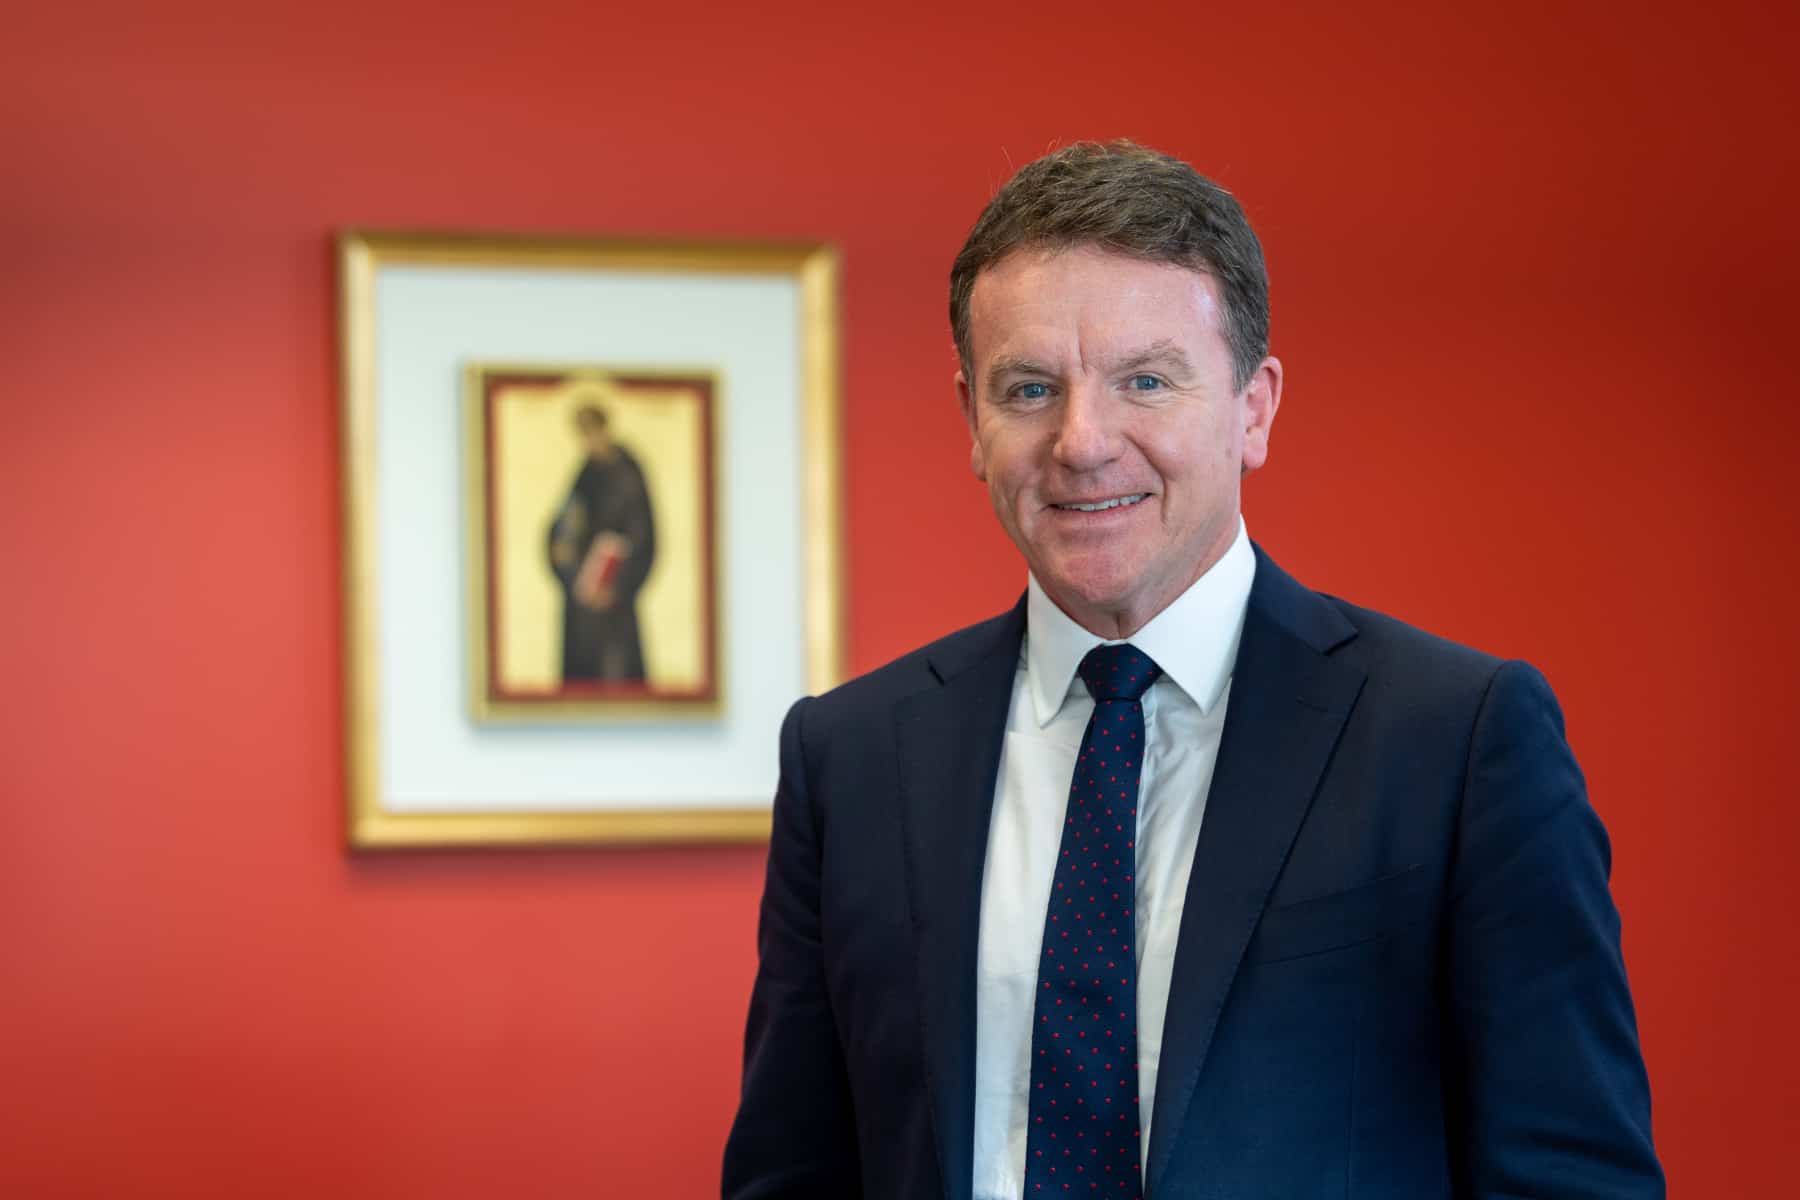 Mr Tony Farley, Executive Director of Sydney Catholic Schools.